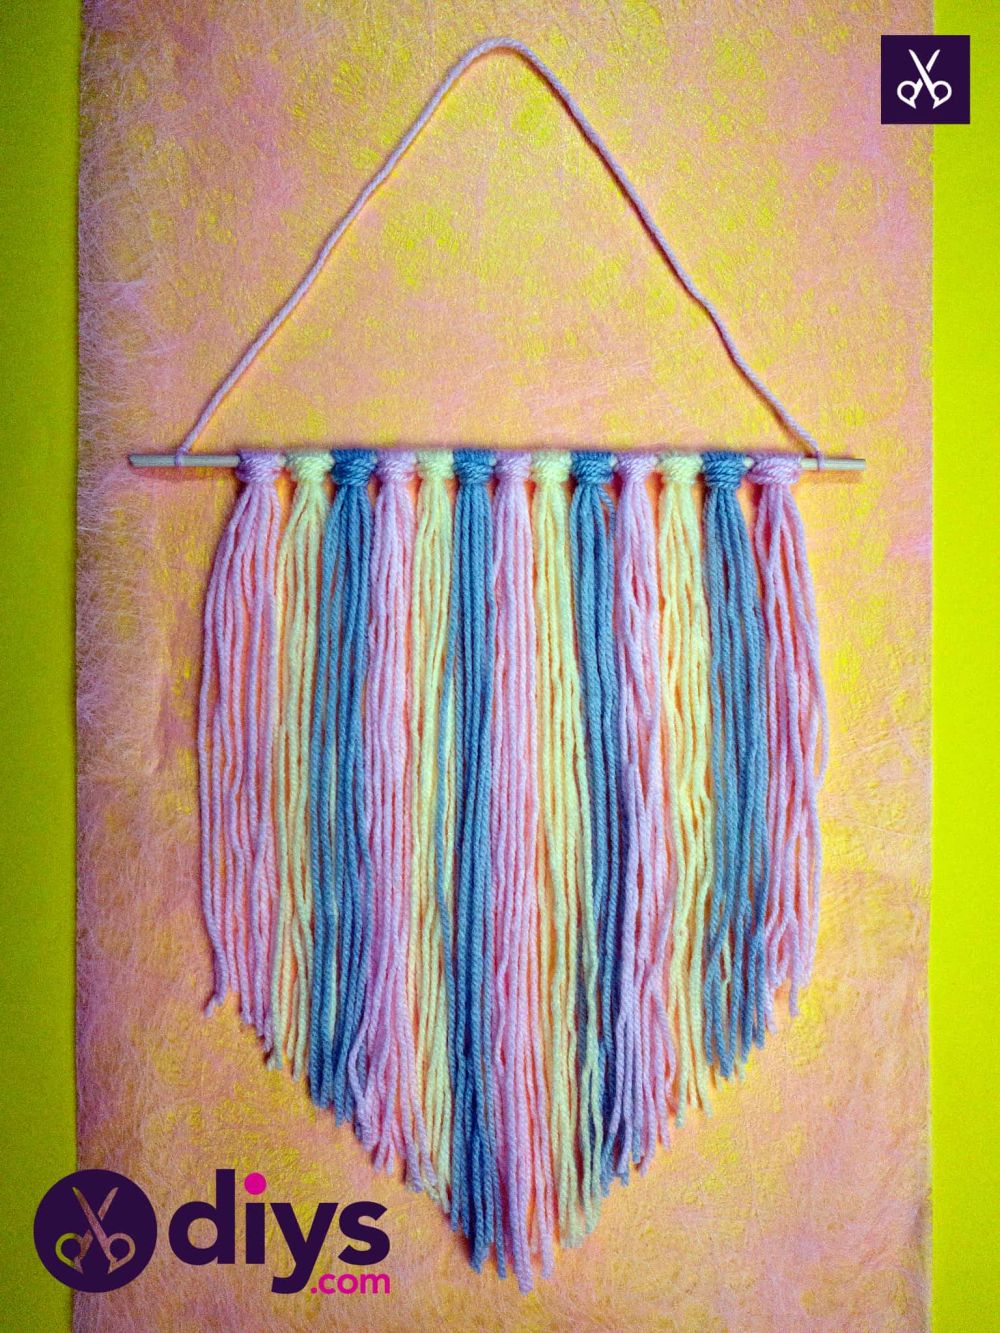 Diy colorful yarn wall hanging